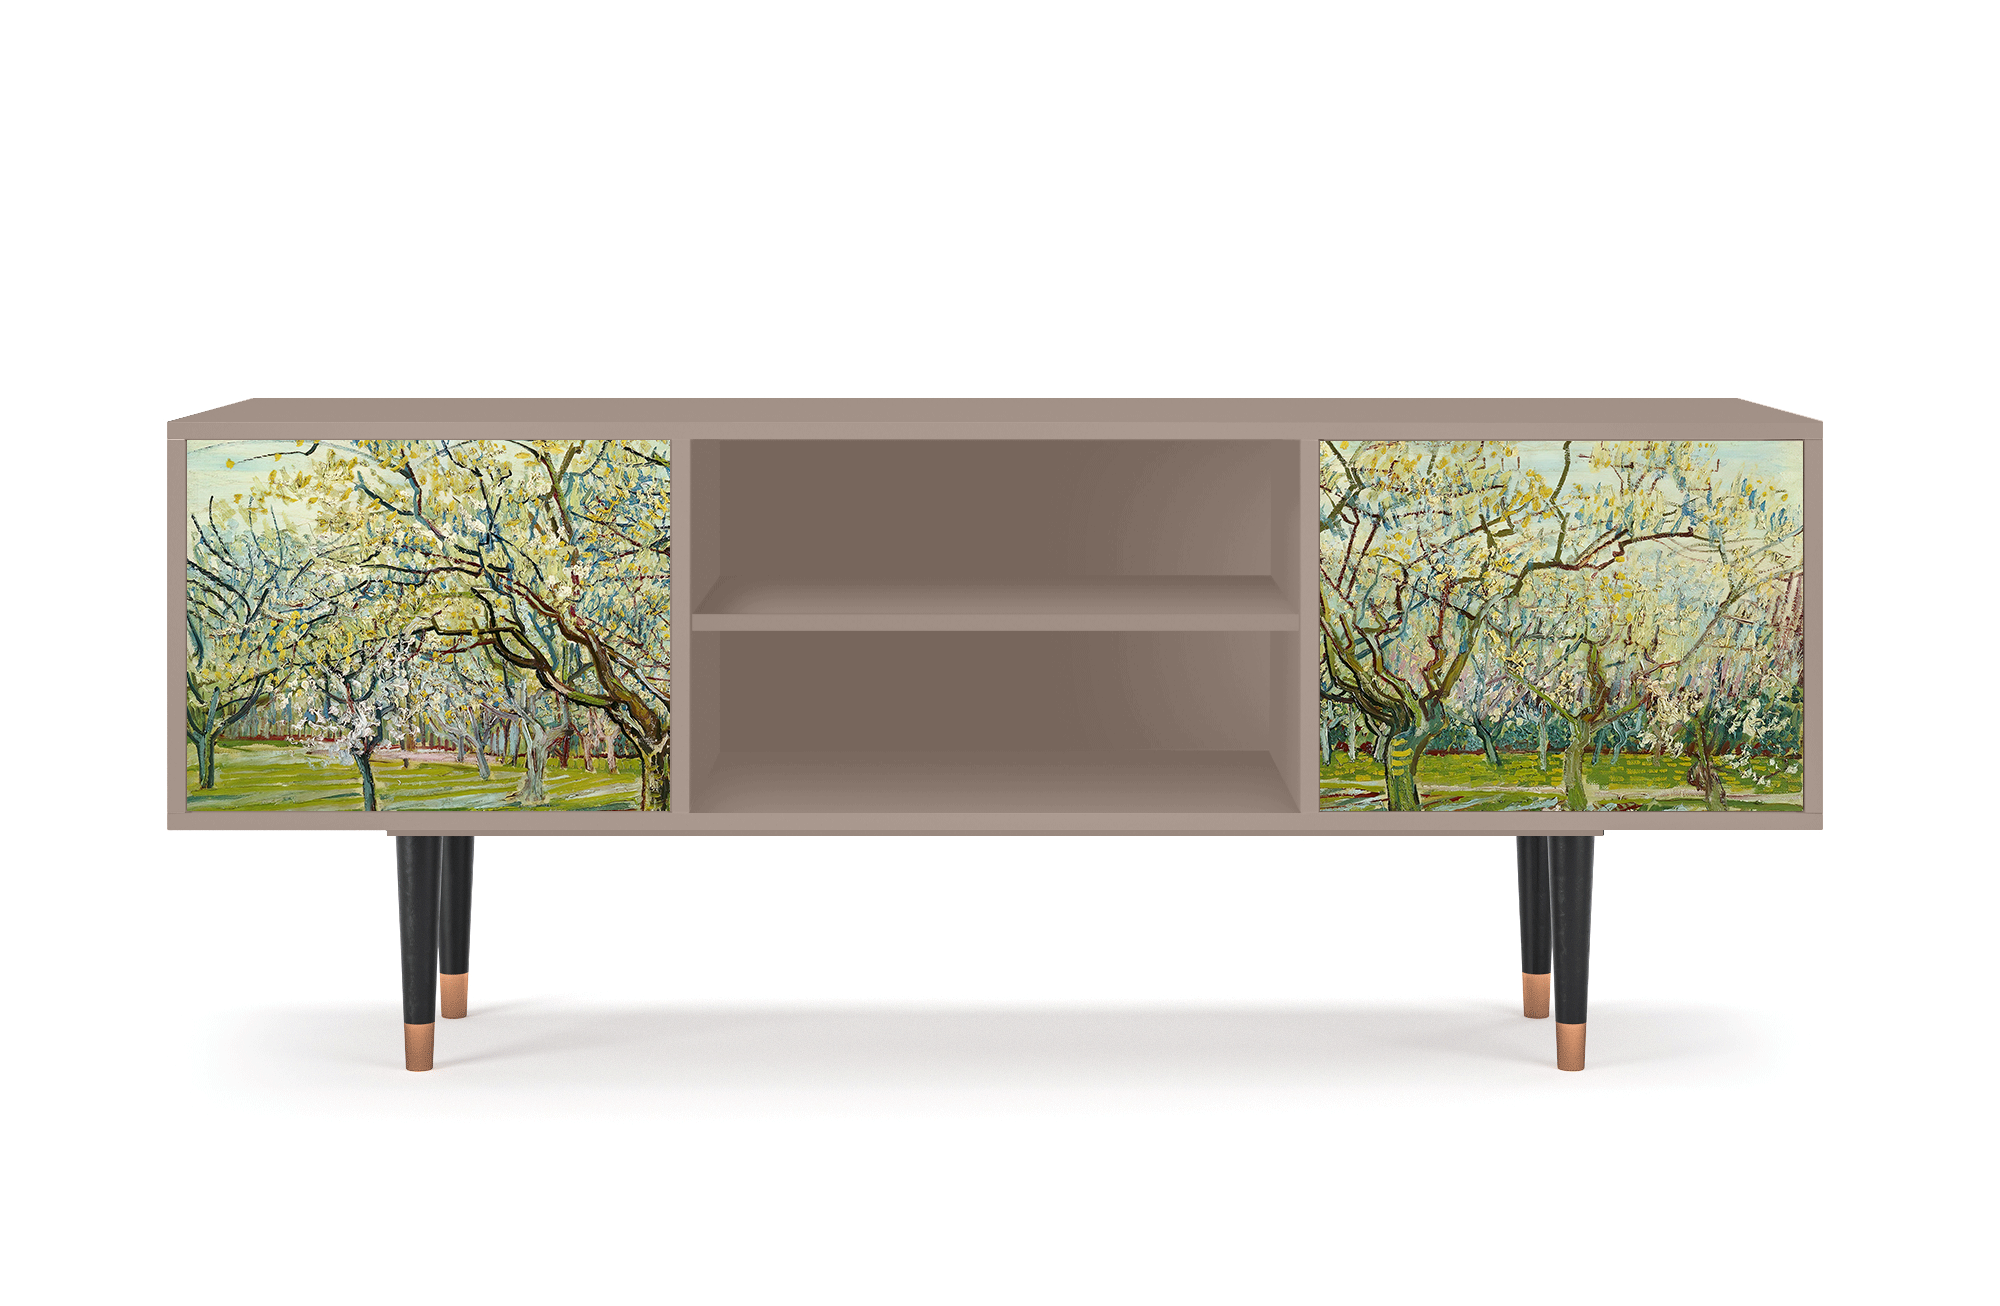 ТВ-Тумба - STORYZ - T2 The White Orchard by Van Gogh, 170 x 69 x 48 см, Бежевый - фотография № 2